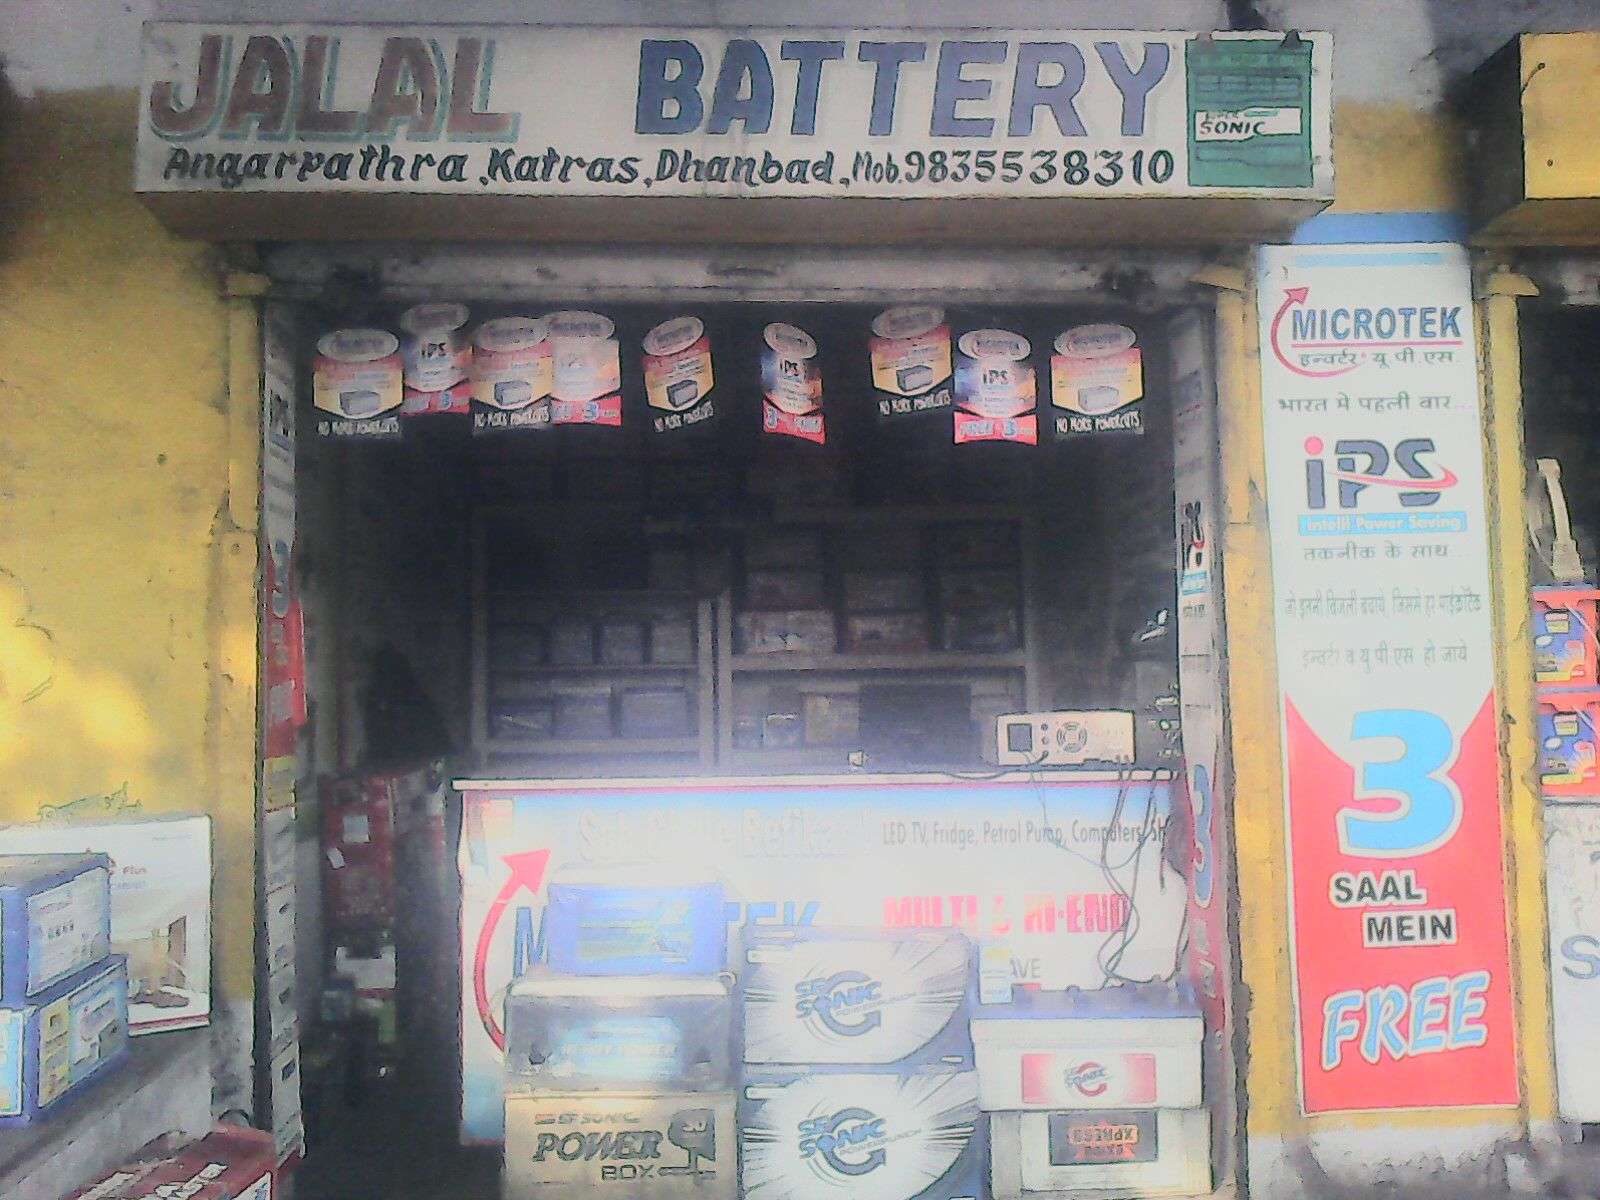 Jalal Battery